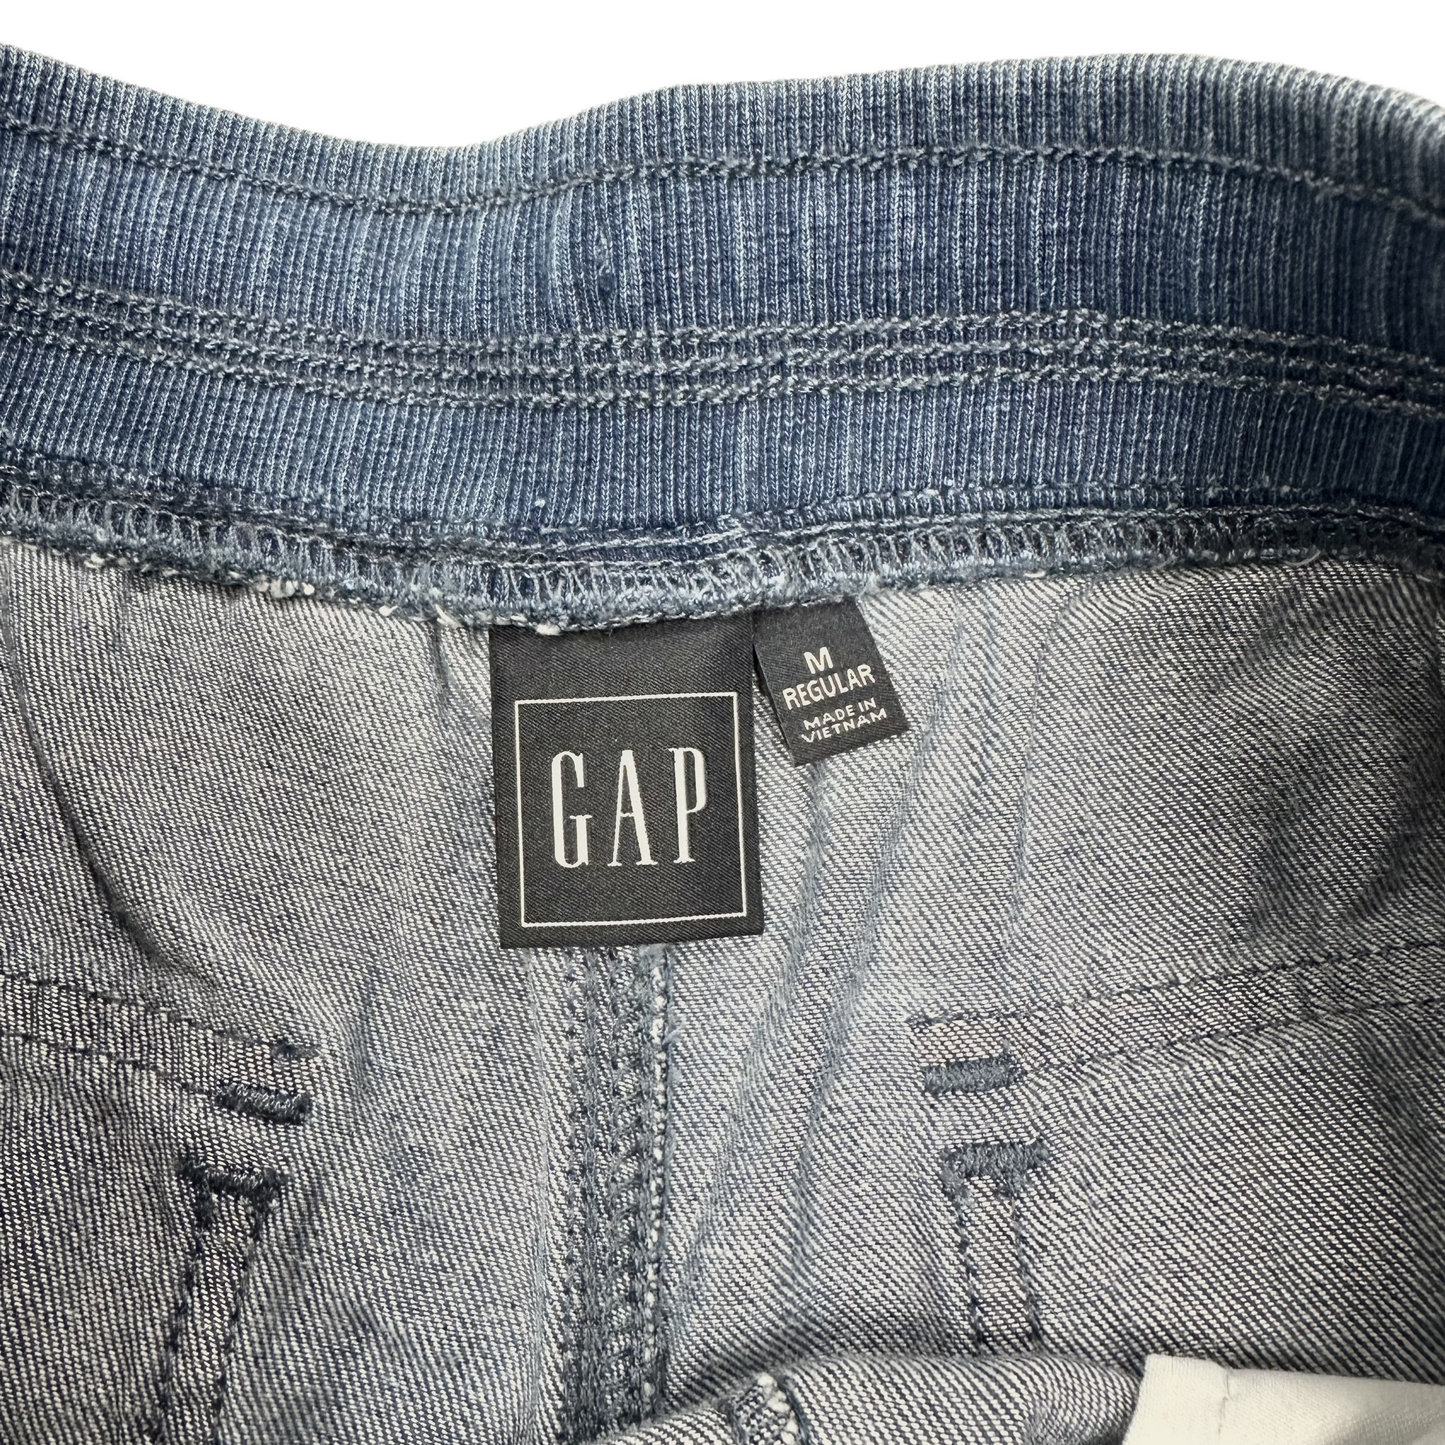 Blue Denim Shorts By Gap, Size: M